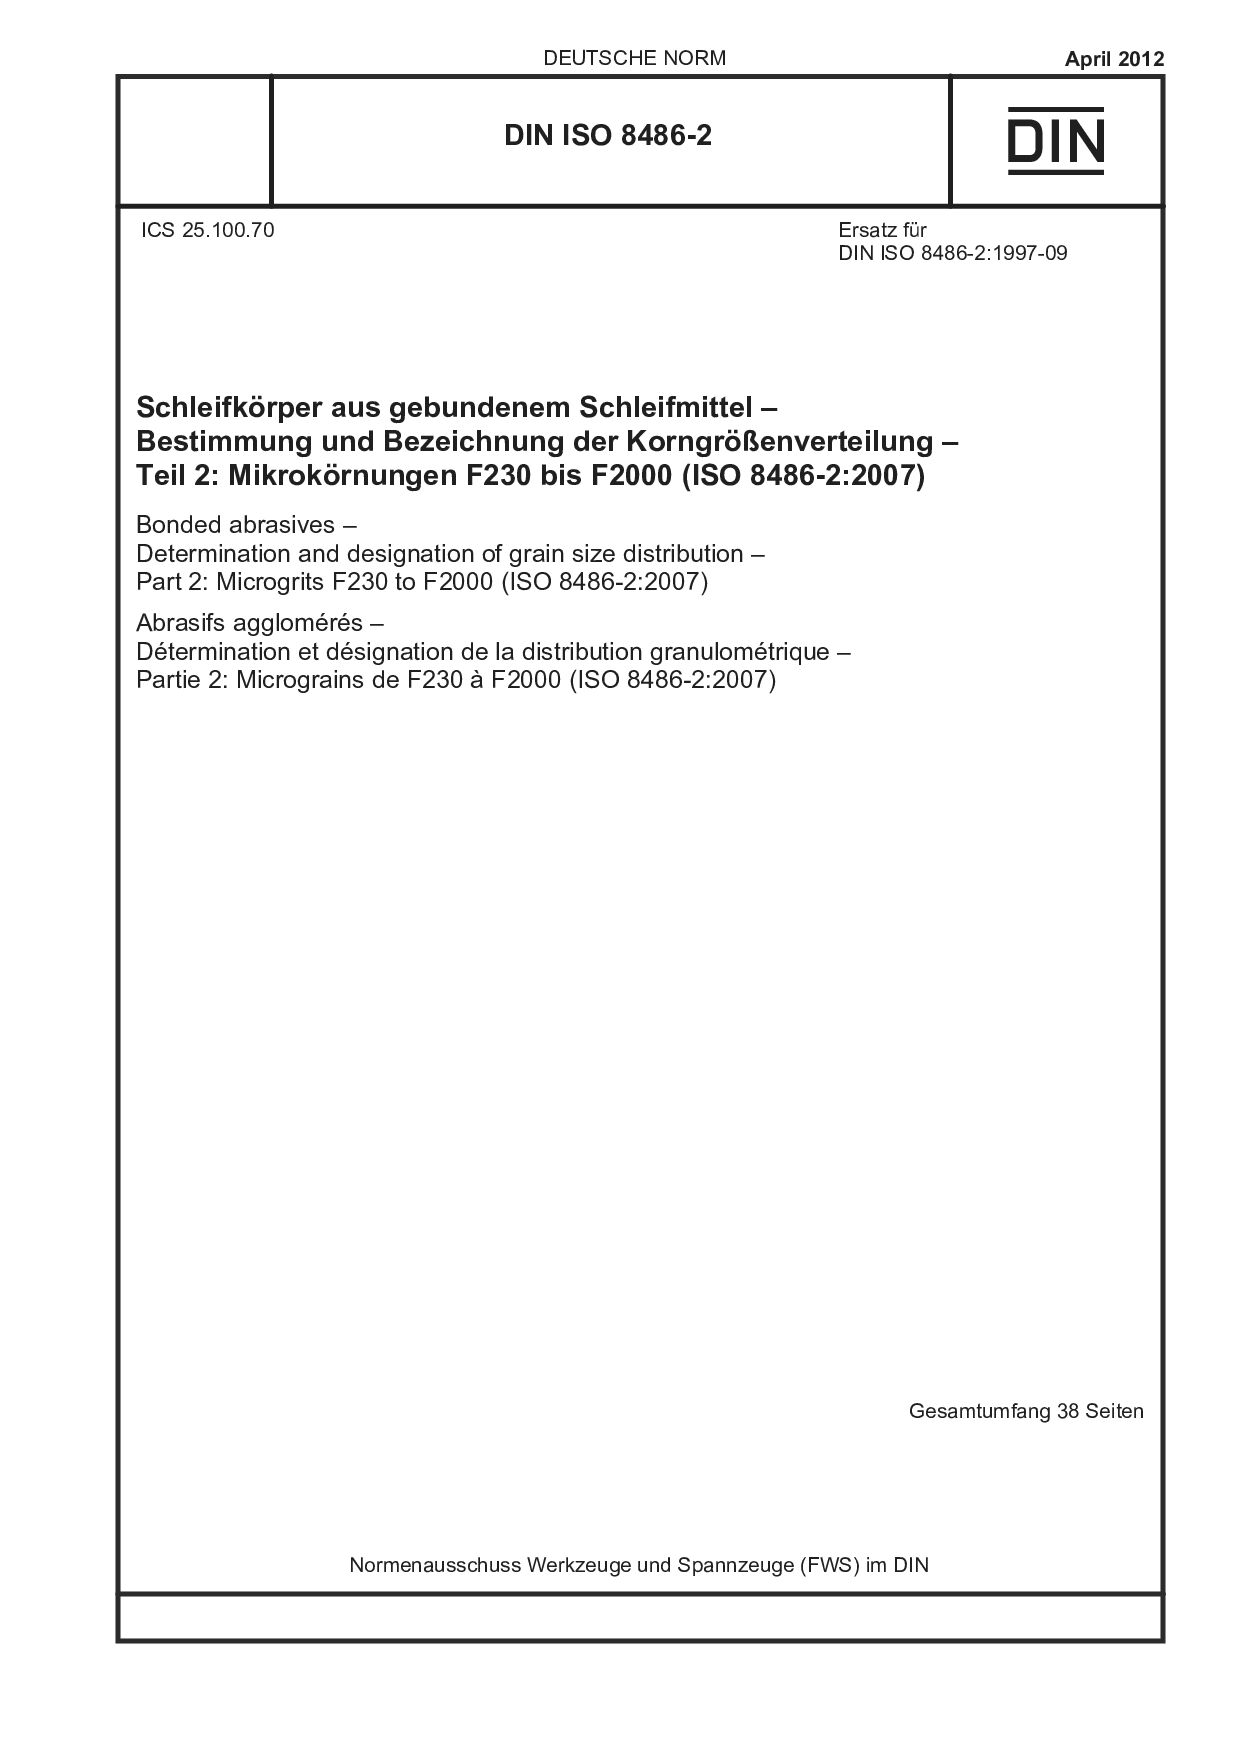 DIN ISO 8486-2:2012